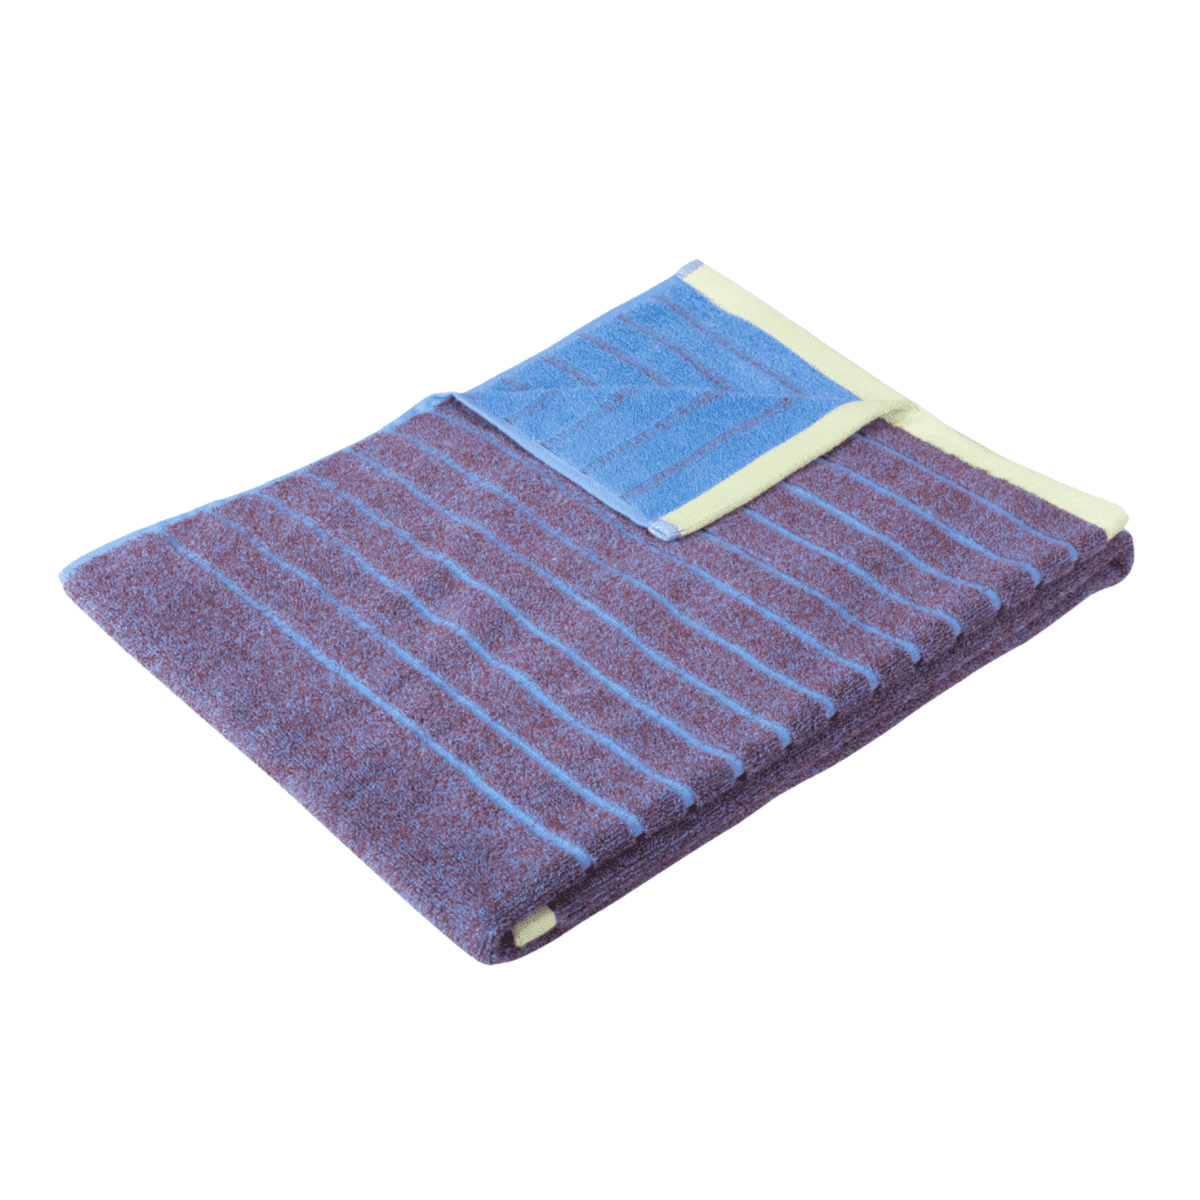 Se Hübsch Promenade towel small - 50x100cm - purple/blue hos Bad&Design